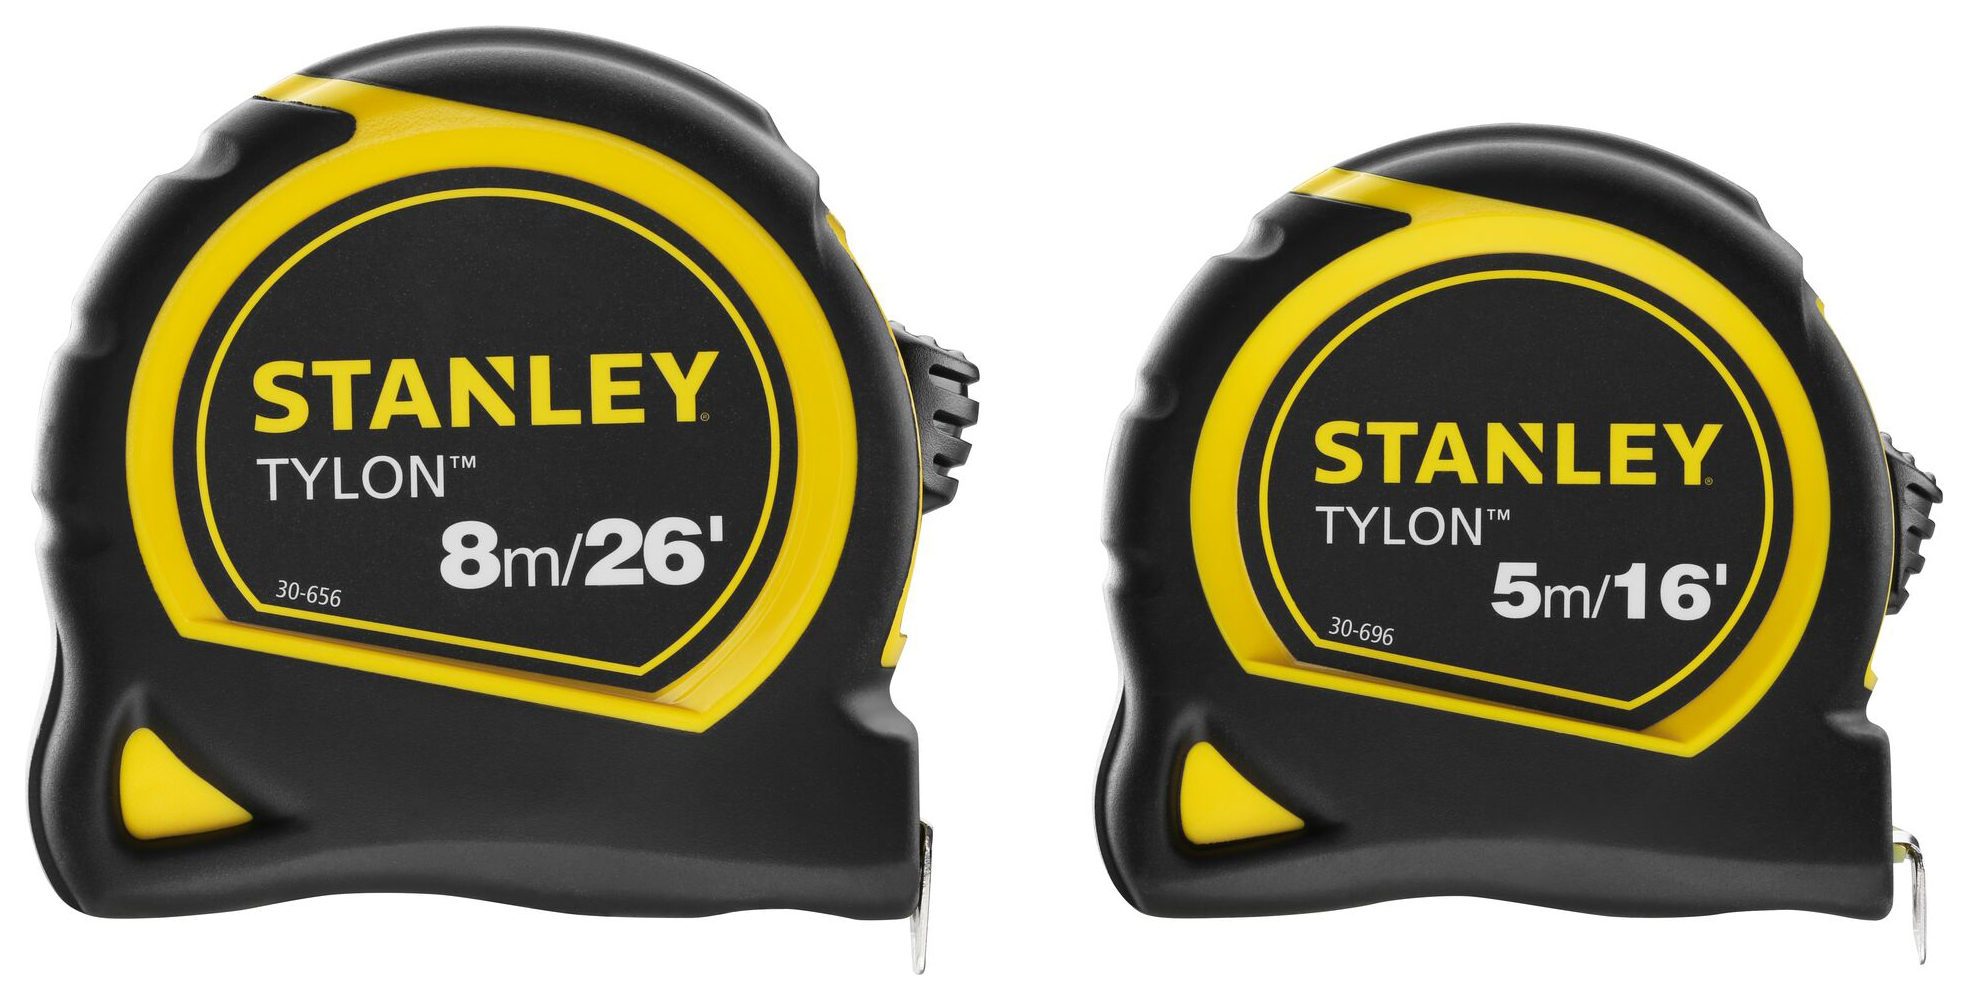 Stanley STHT9-98985 Tylon Tape Measure Twin Pack - 5m & 8m